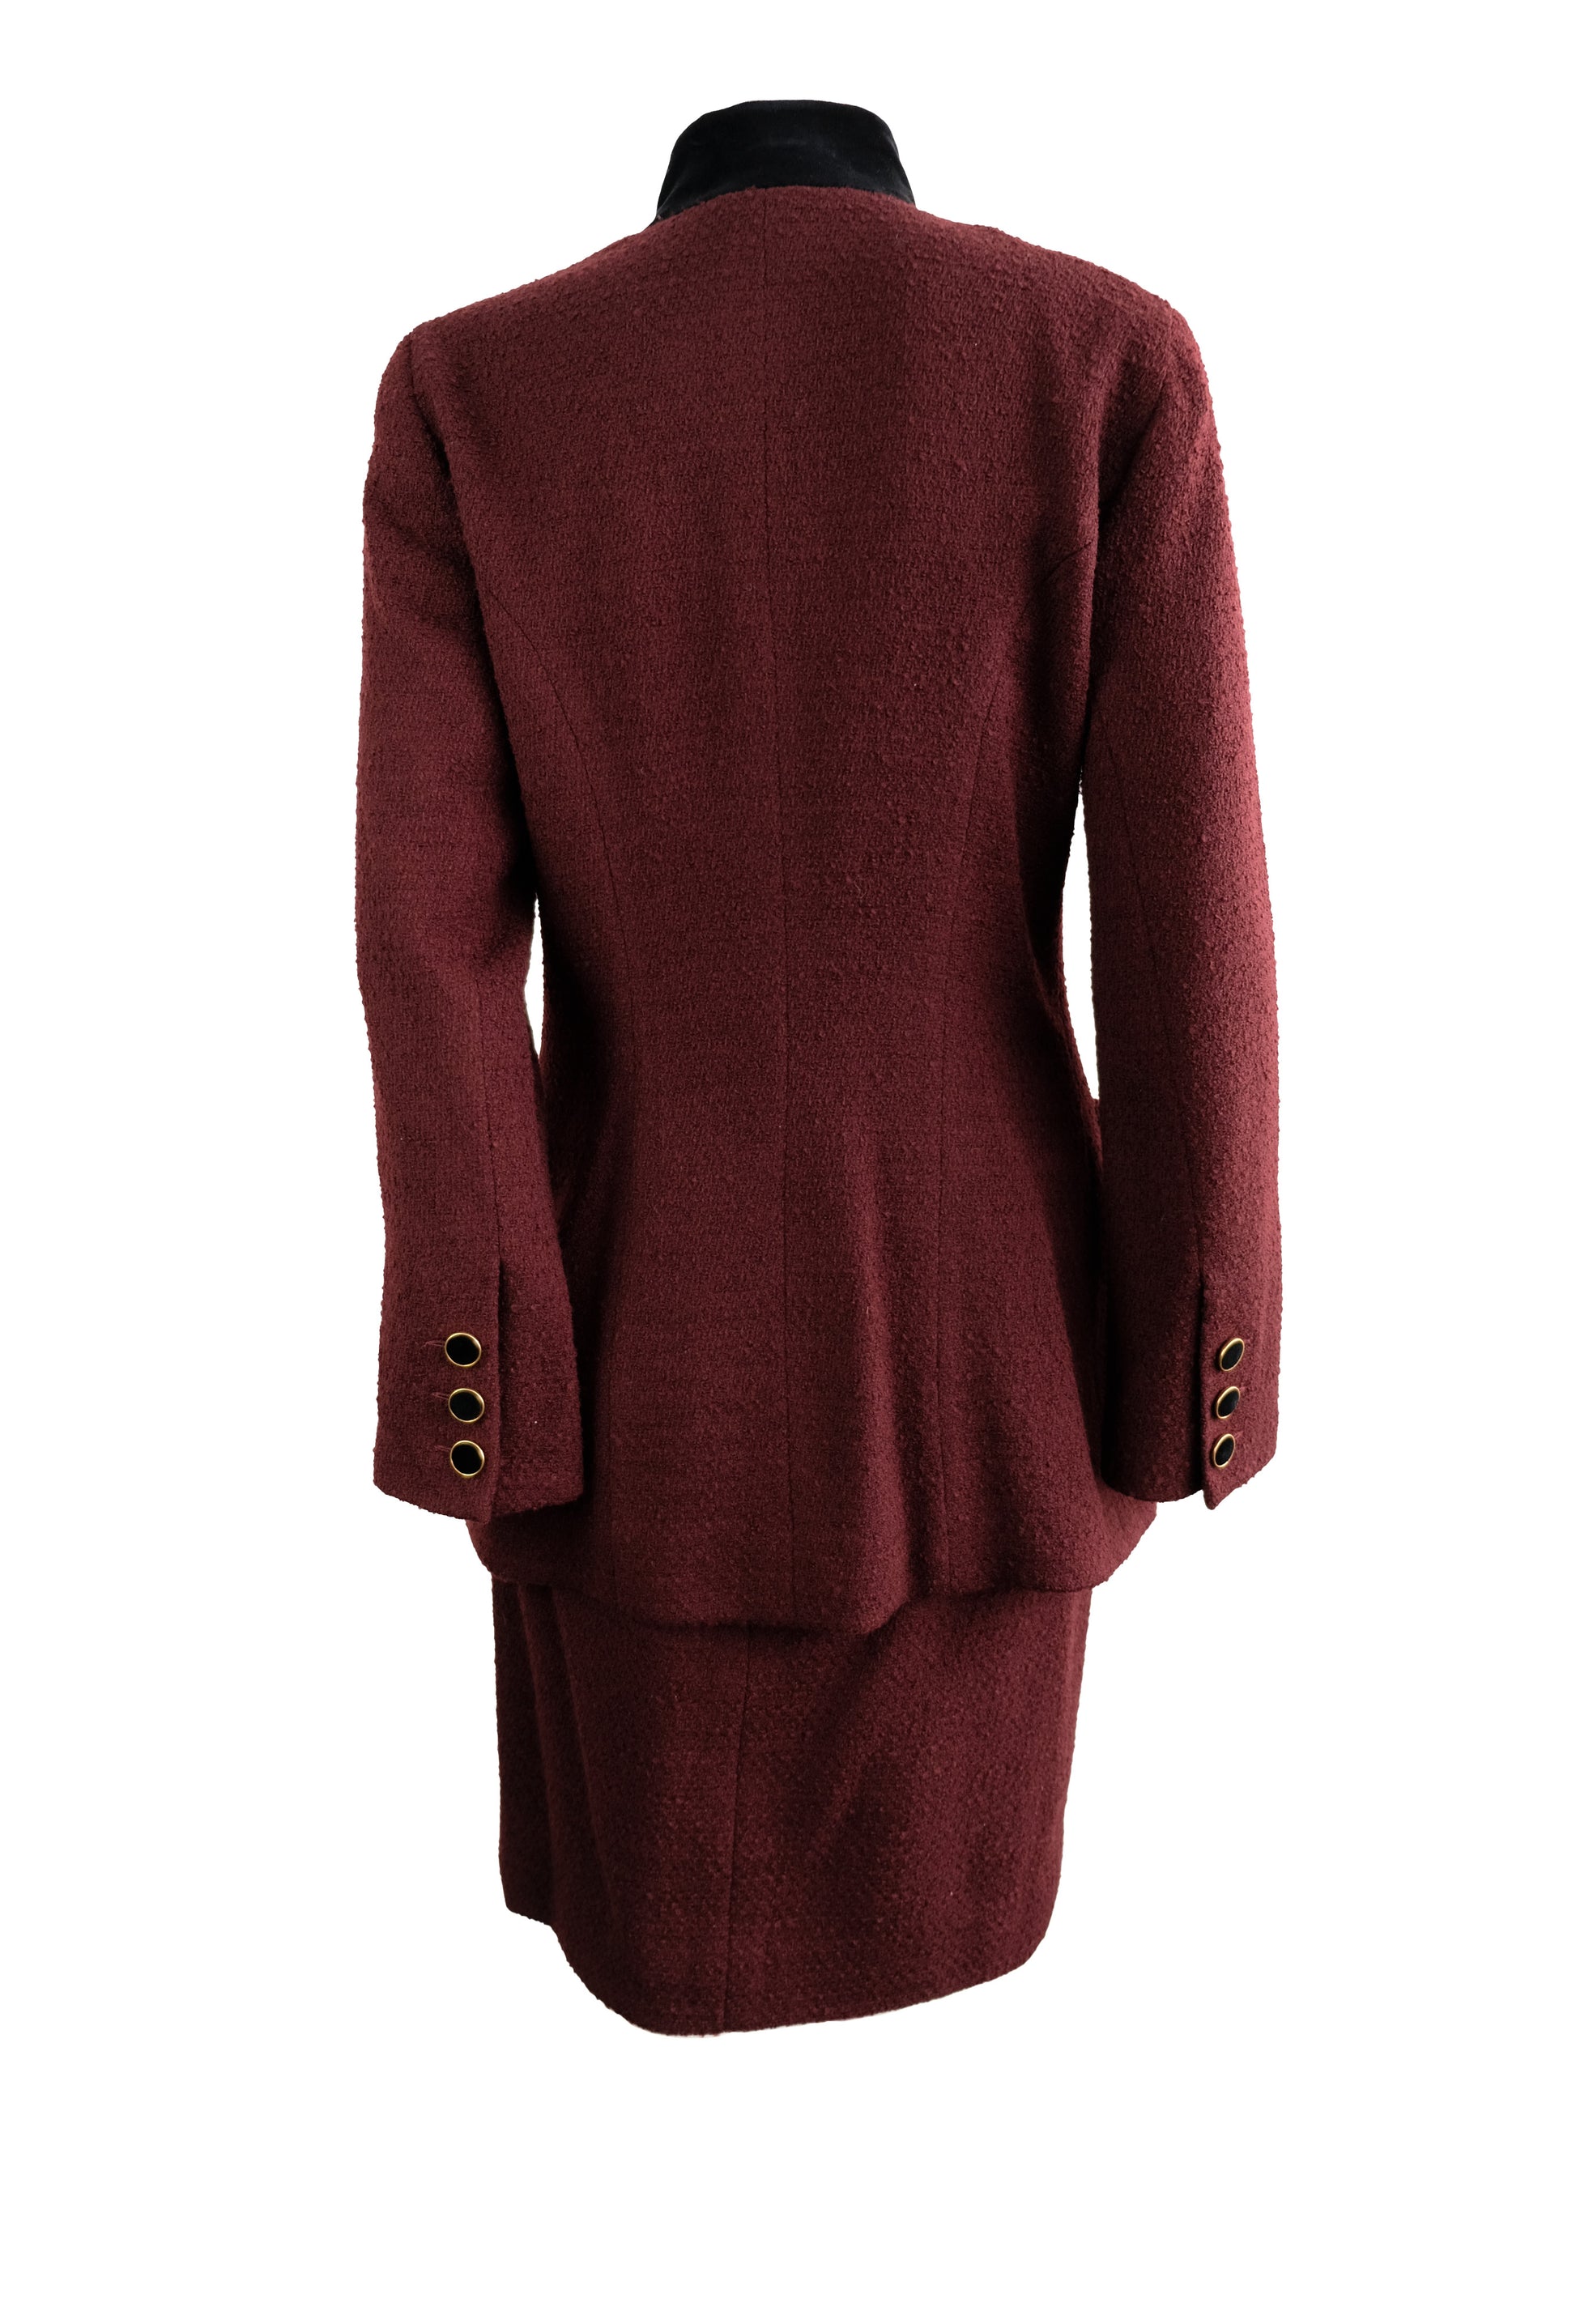 Karl Lagerfeld Vintage Skirt Suit in Burgundy Bouclé Wool with Velvet Trim, UK10-12